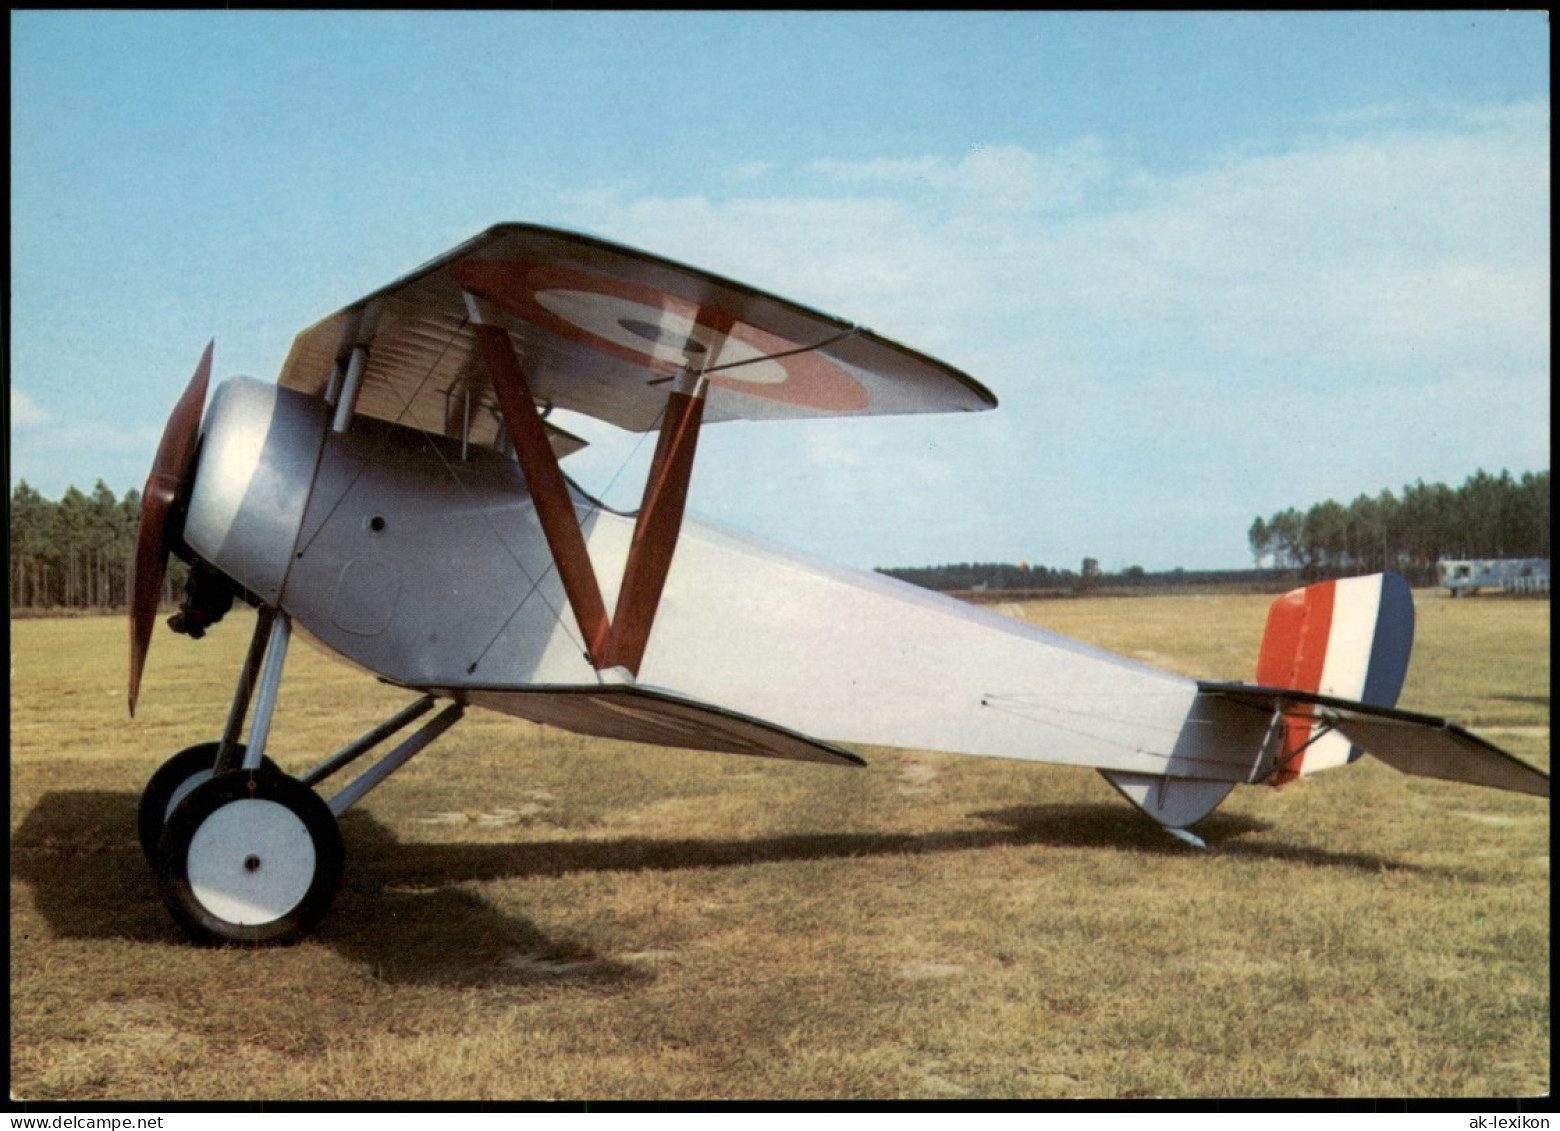 Ansichtskarte  Flugwesen Airplane Flugzeug NIEPORT I Anno 1915 1980 - 1946-....: Era Moderna